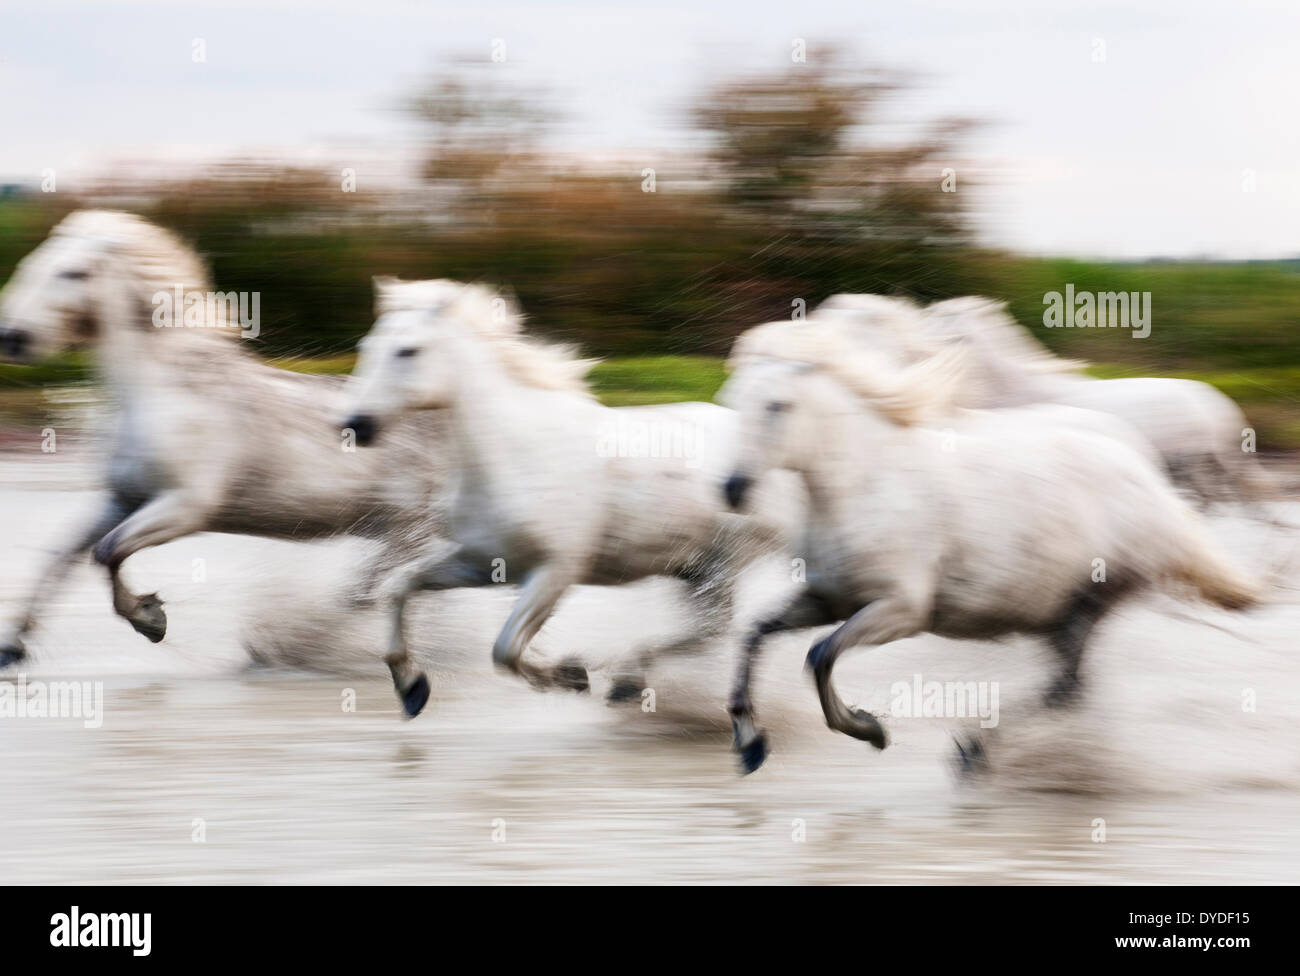 Camargue white horses galloping through water. Stock Photo